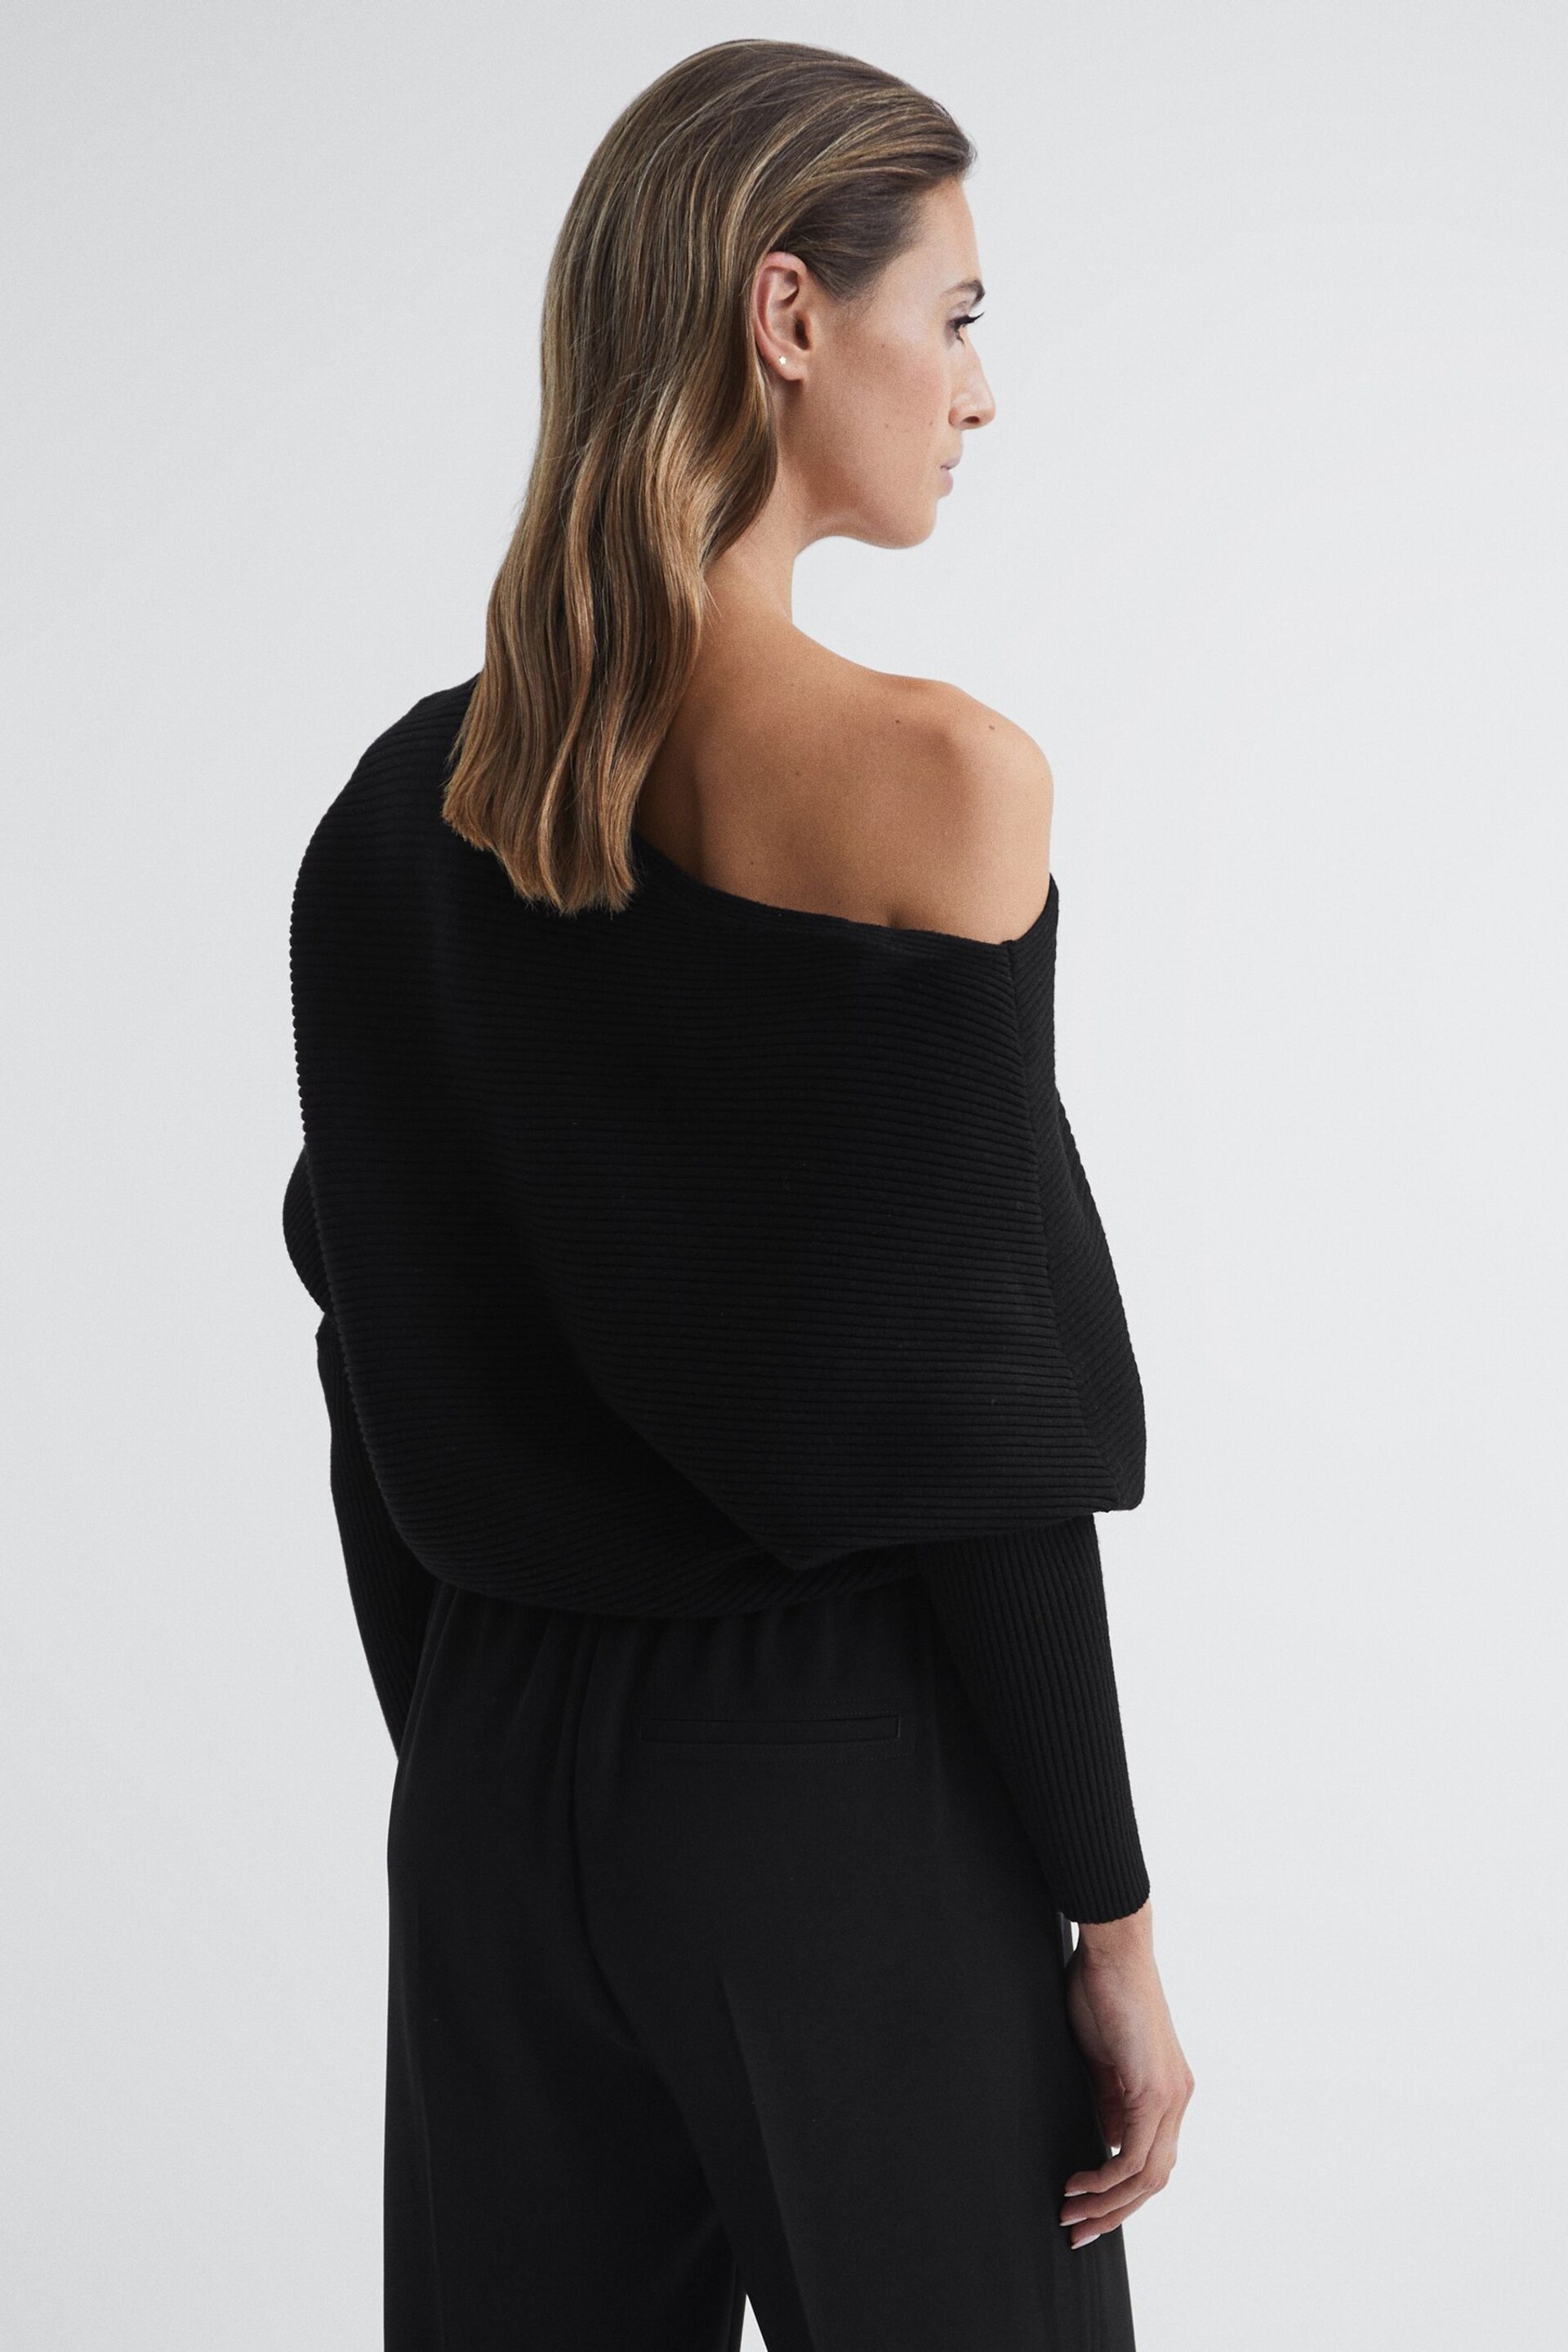 Reiss Black Lorna Asymmetric Drape Knitted Top - Image 5 of 5